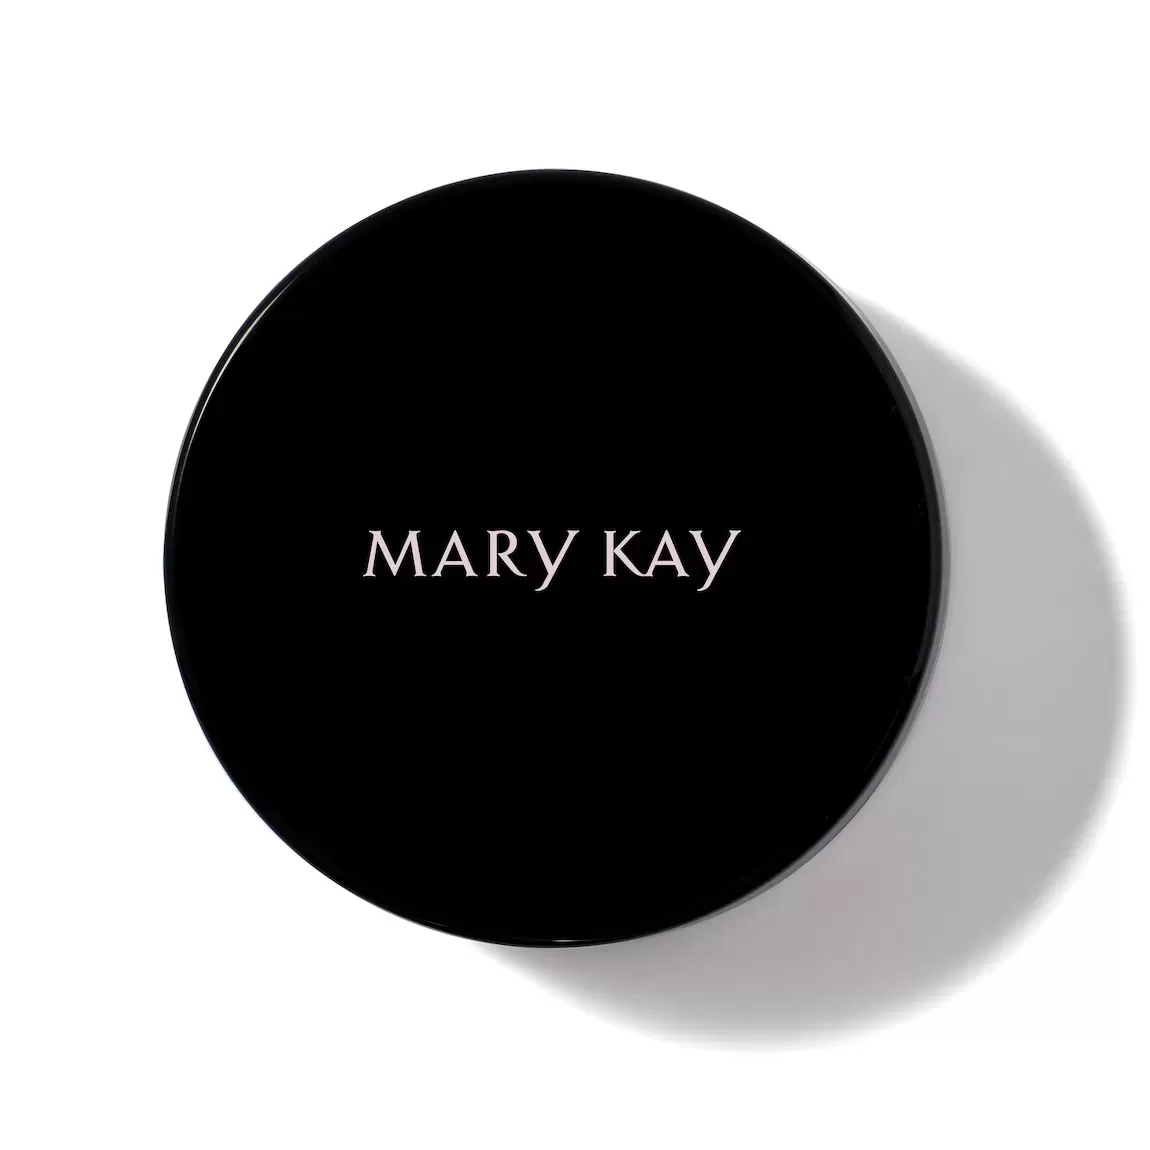 about Setting Powder MARY KAY MARY KAY Silky Setting Powder